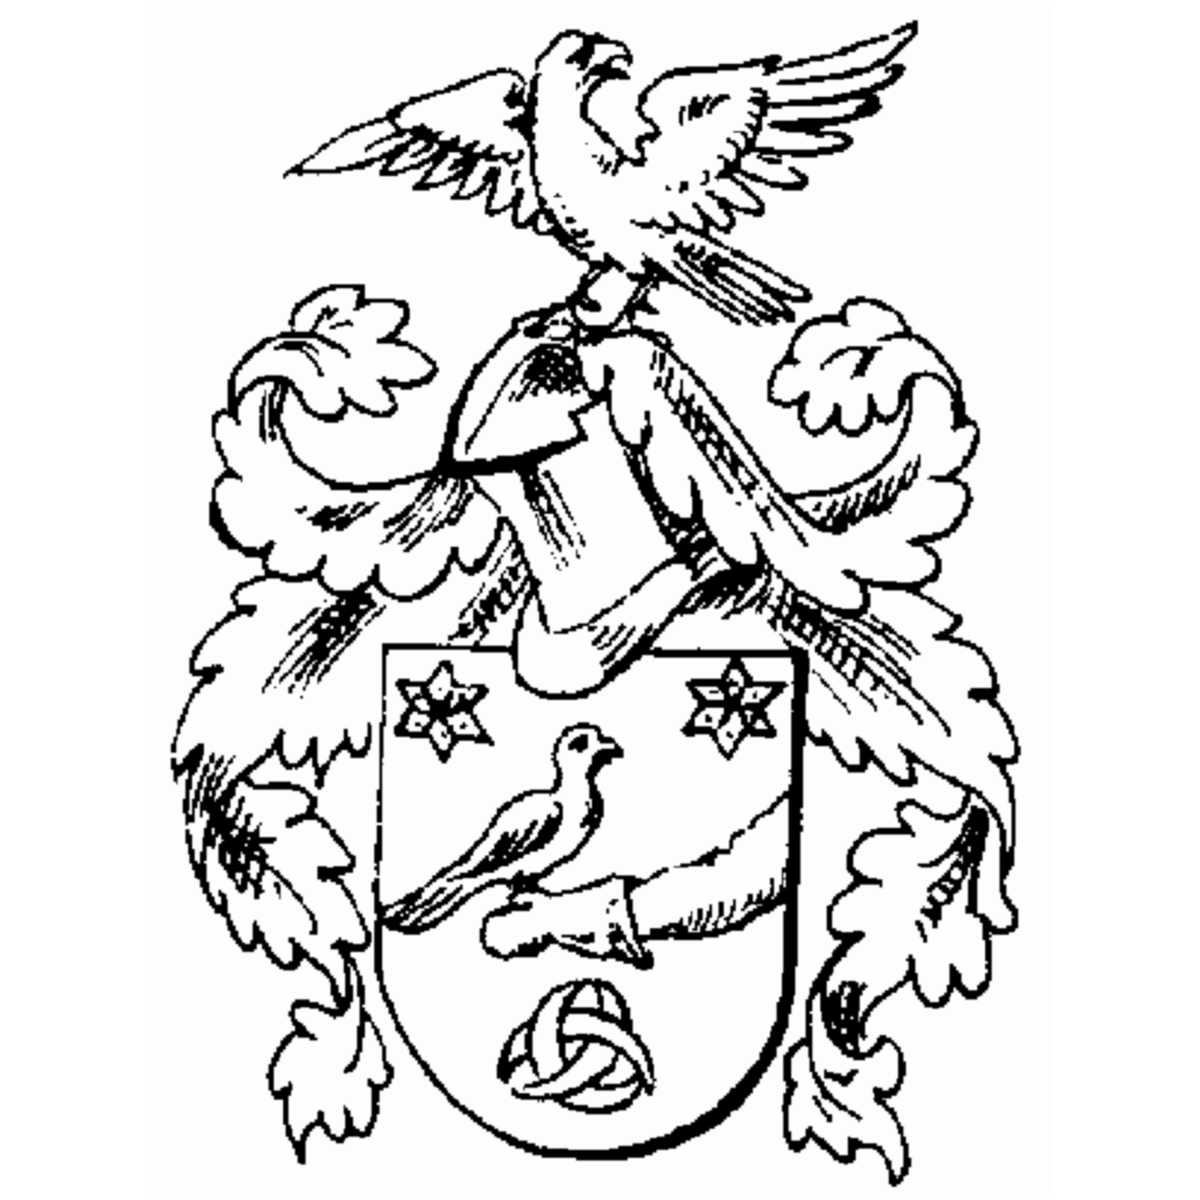 Wappen der Familie Freysam